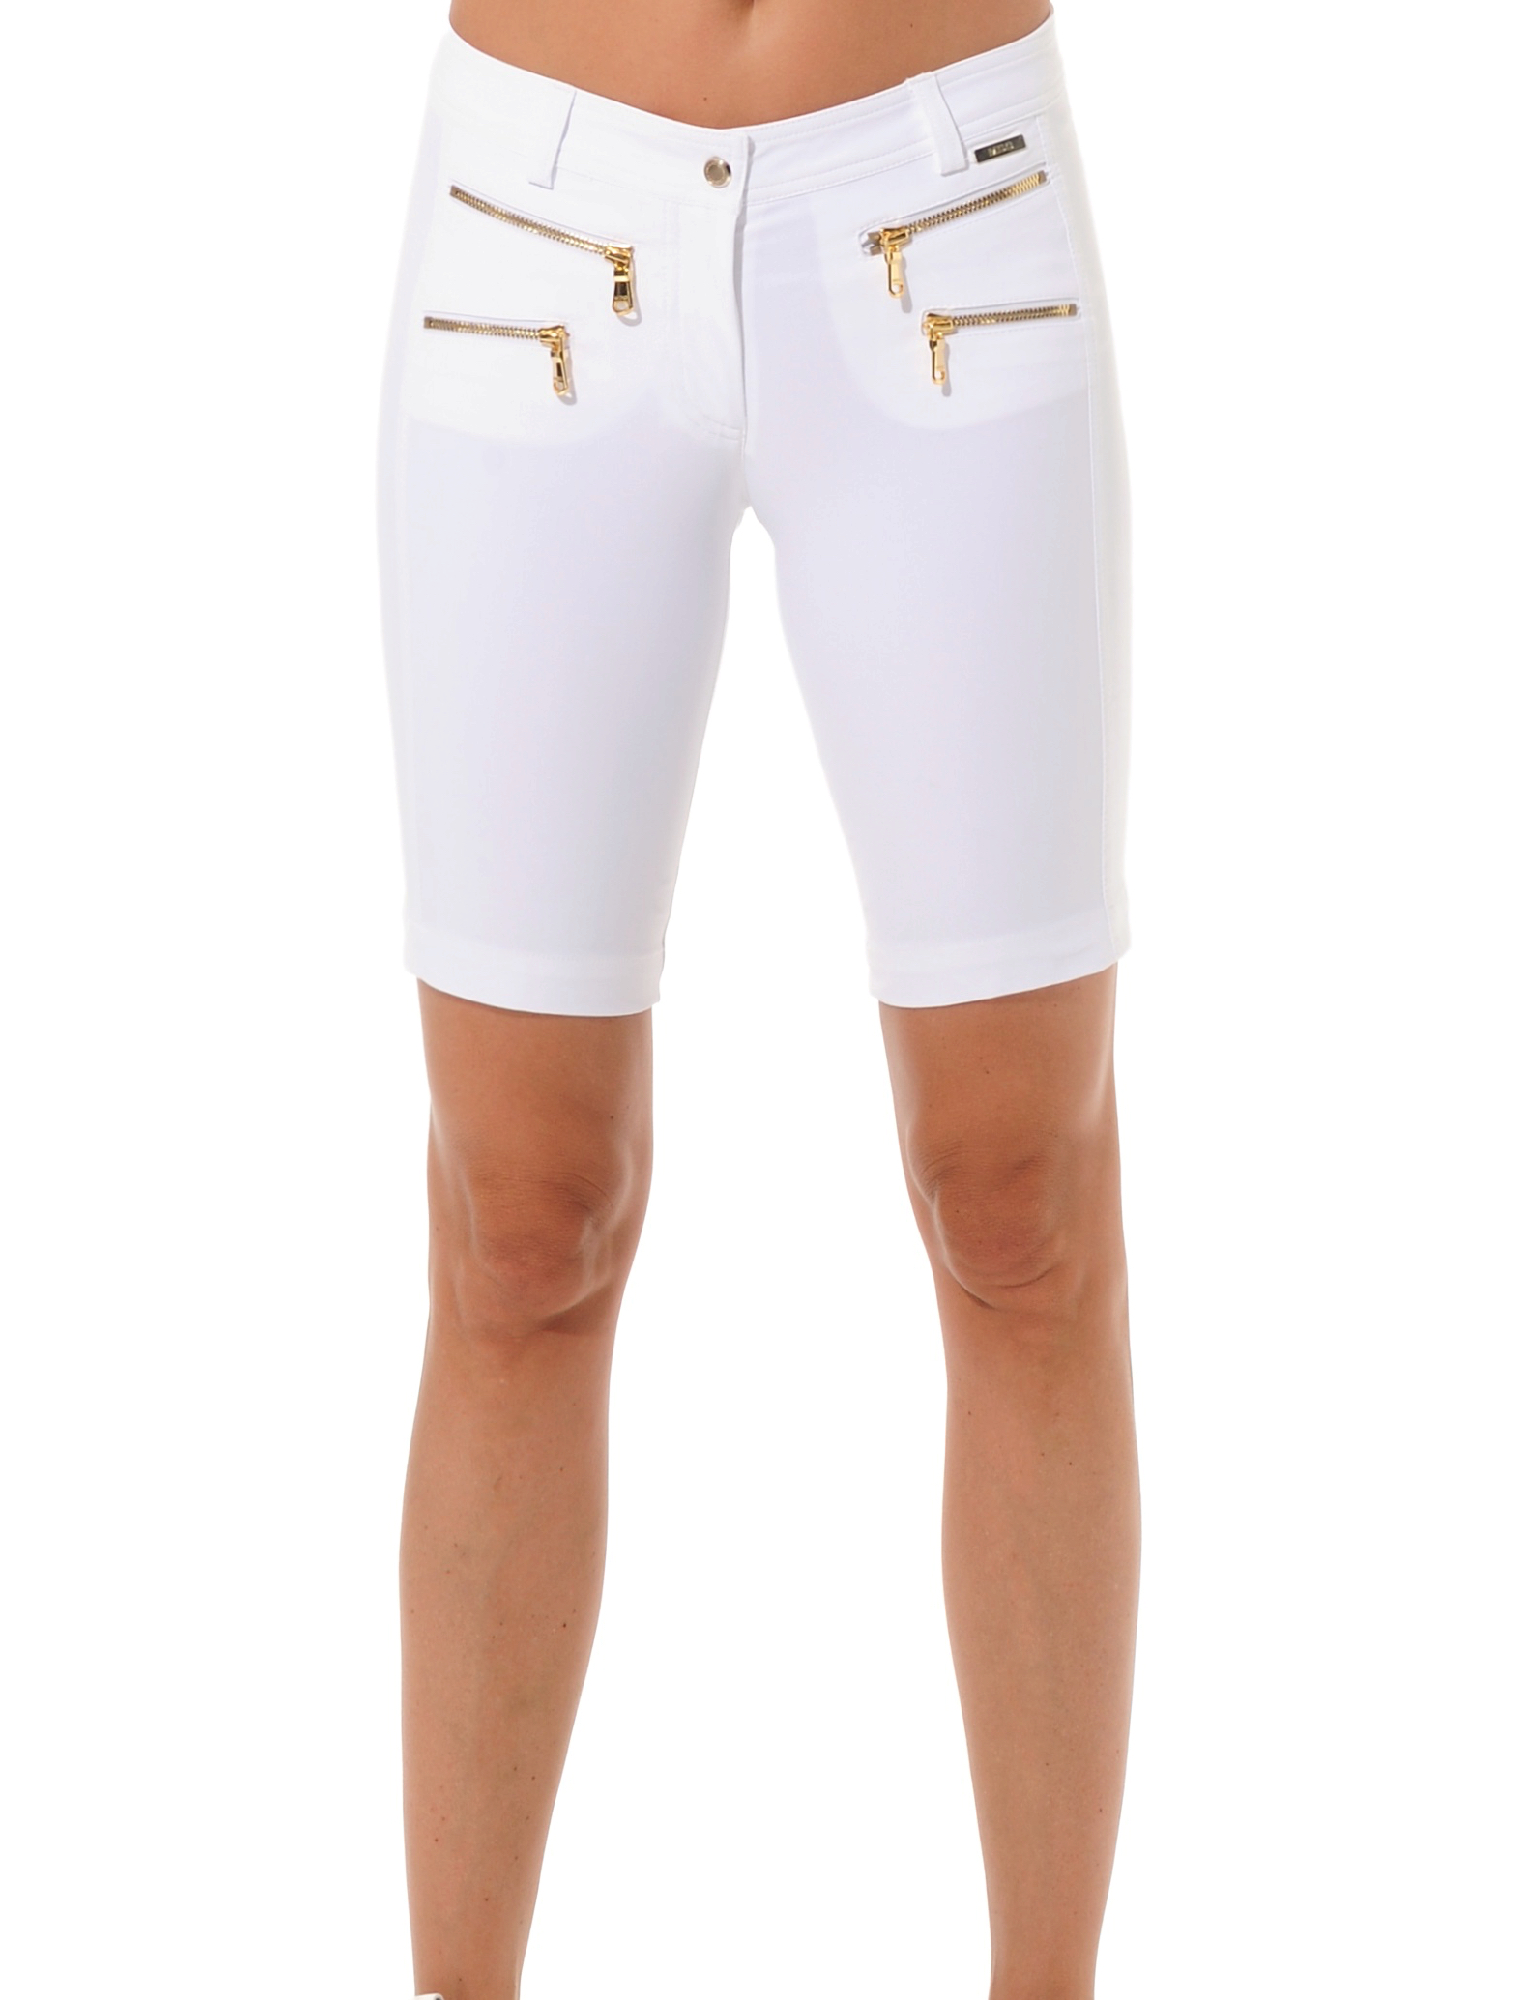 4way stretch shiny gold double zip shorts white 